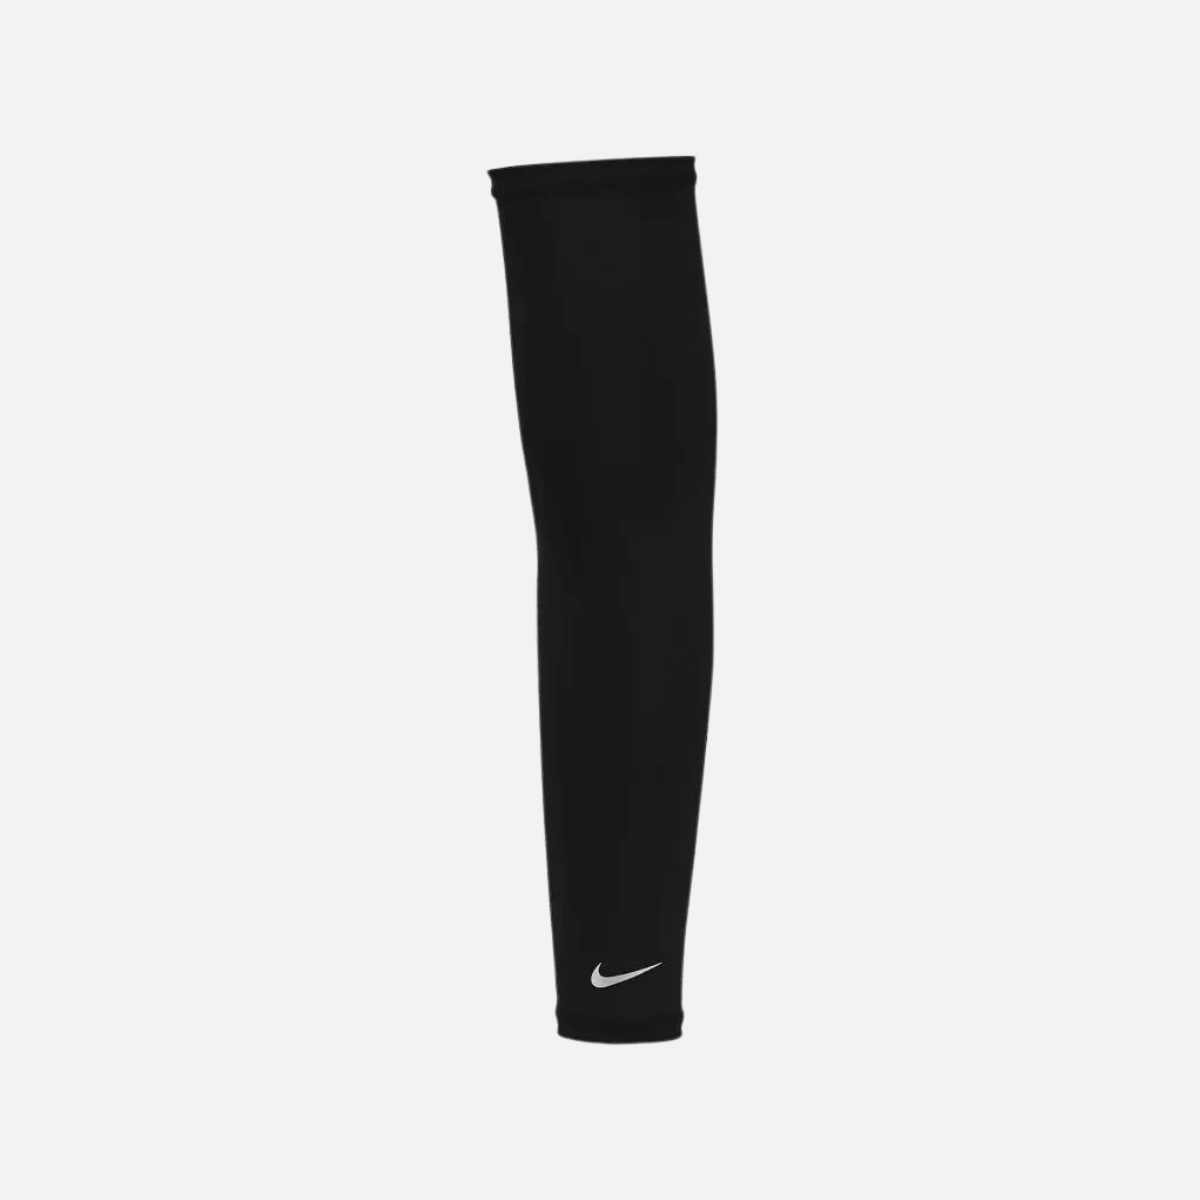 Nike Dri-FIT Lightweight Unisex Running Sleeves 2.0 - Black/Silver